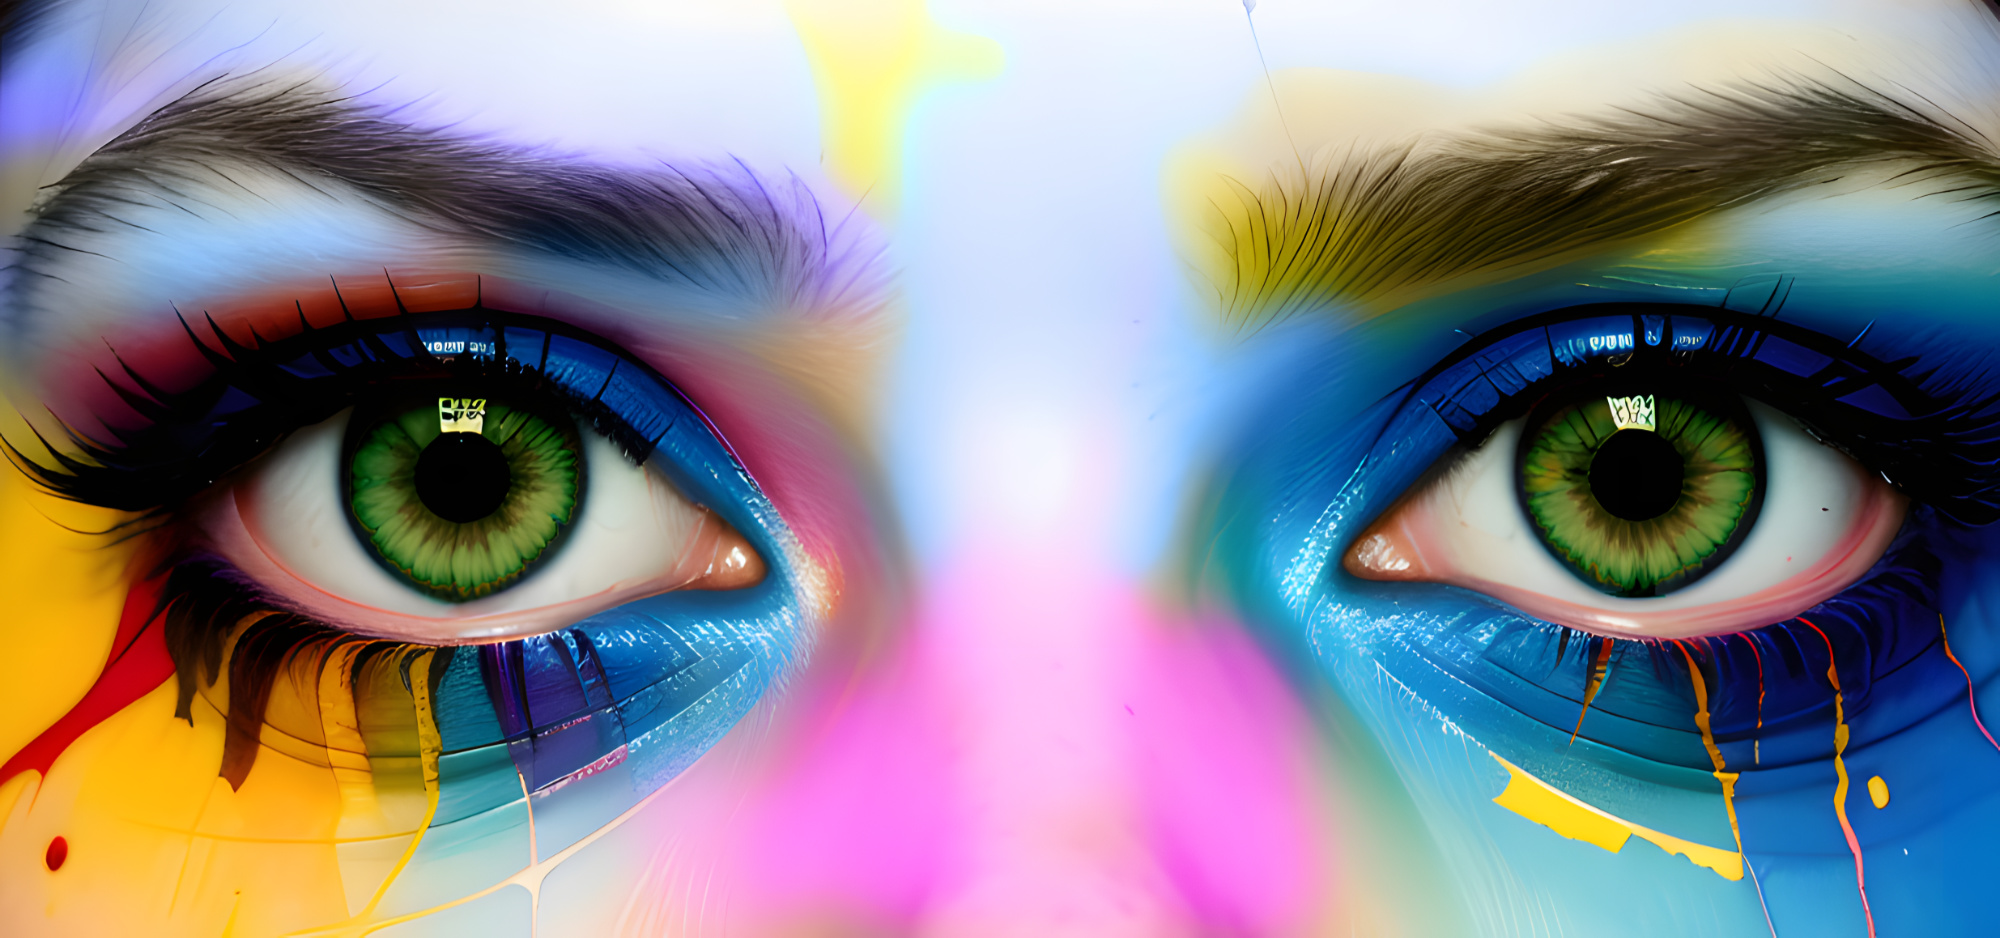 Farbpsychologie - Augen in Regenbogenfarben